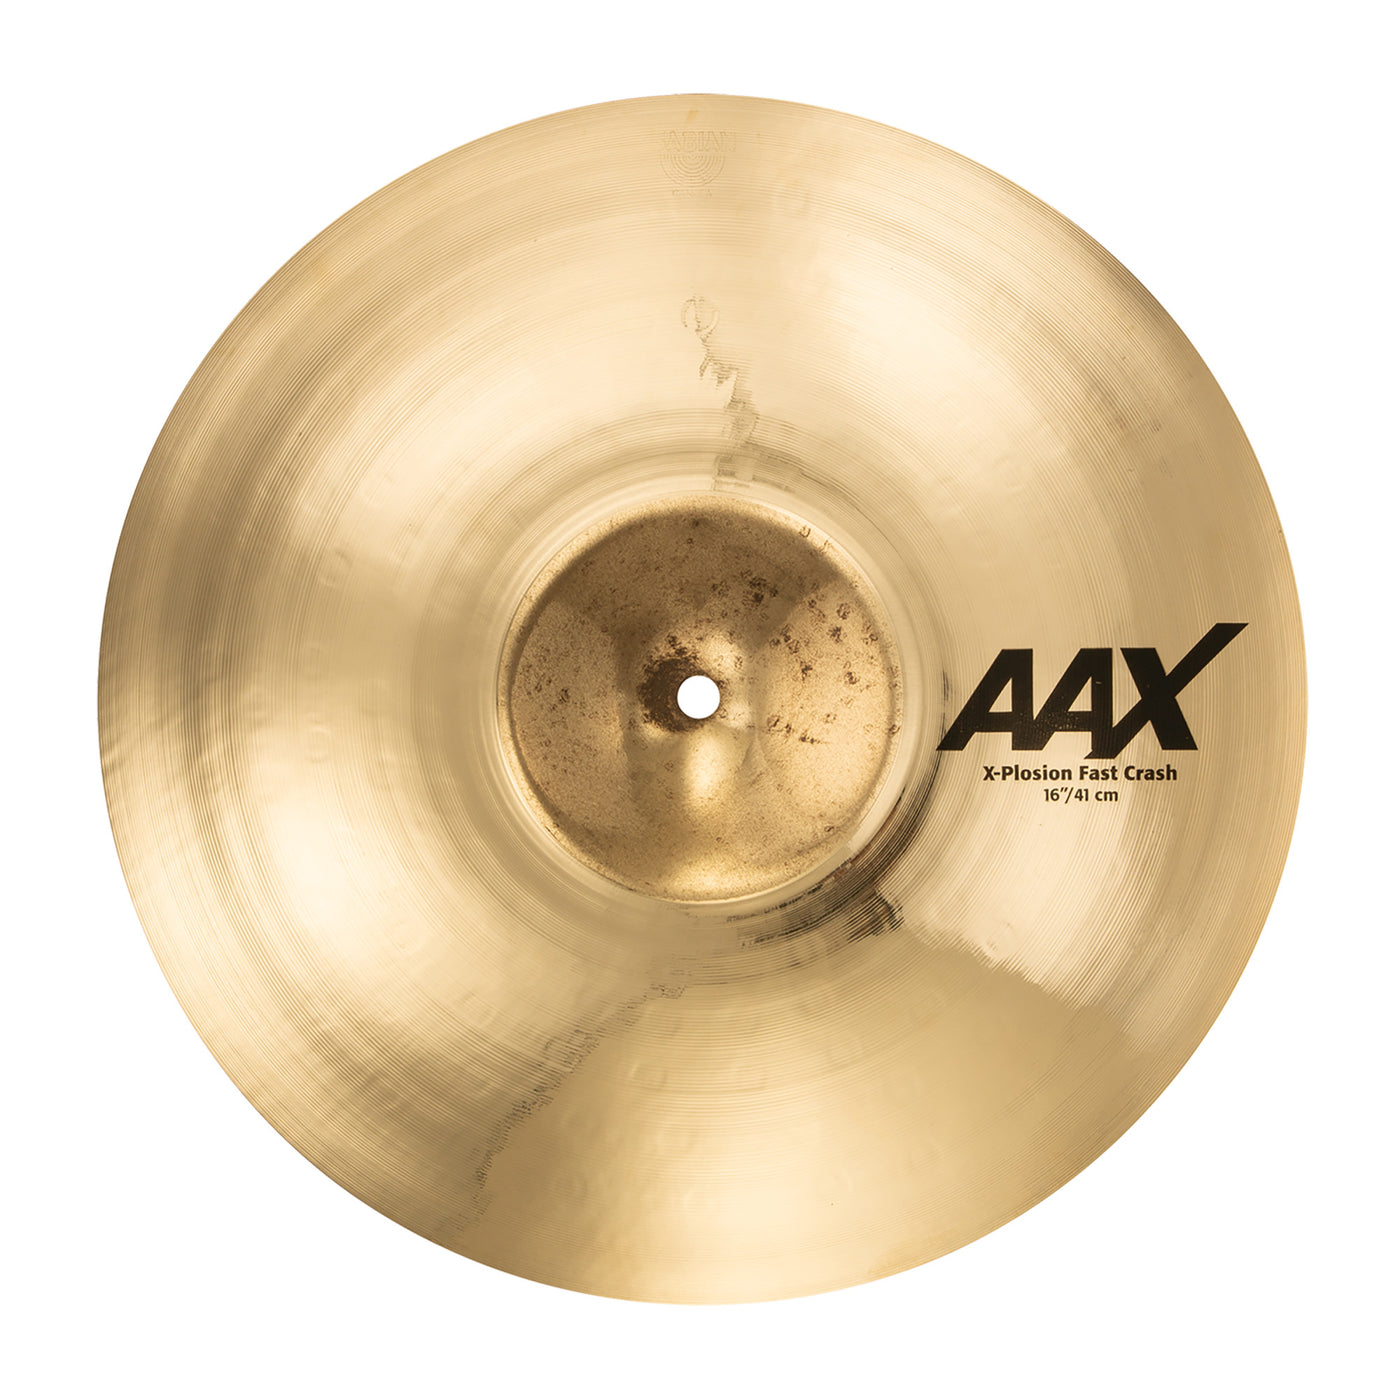 Sabian 16" AAX X-Plosion Fast Crash Cymbal - Brilliant Finish